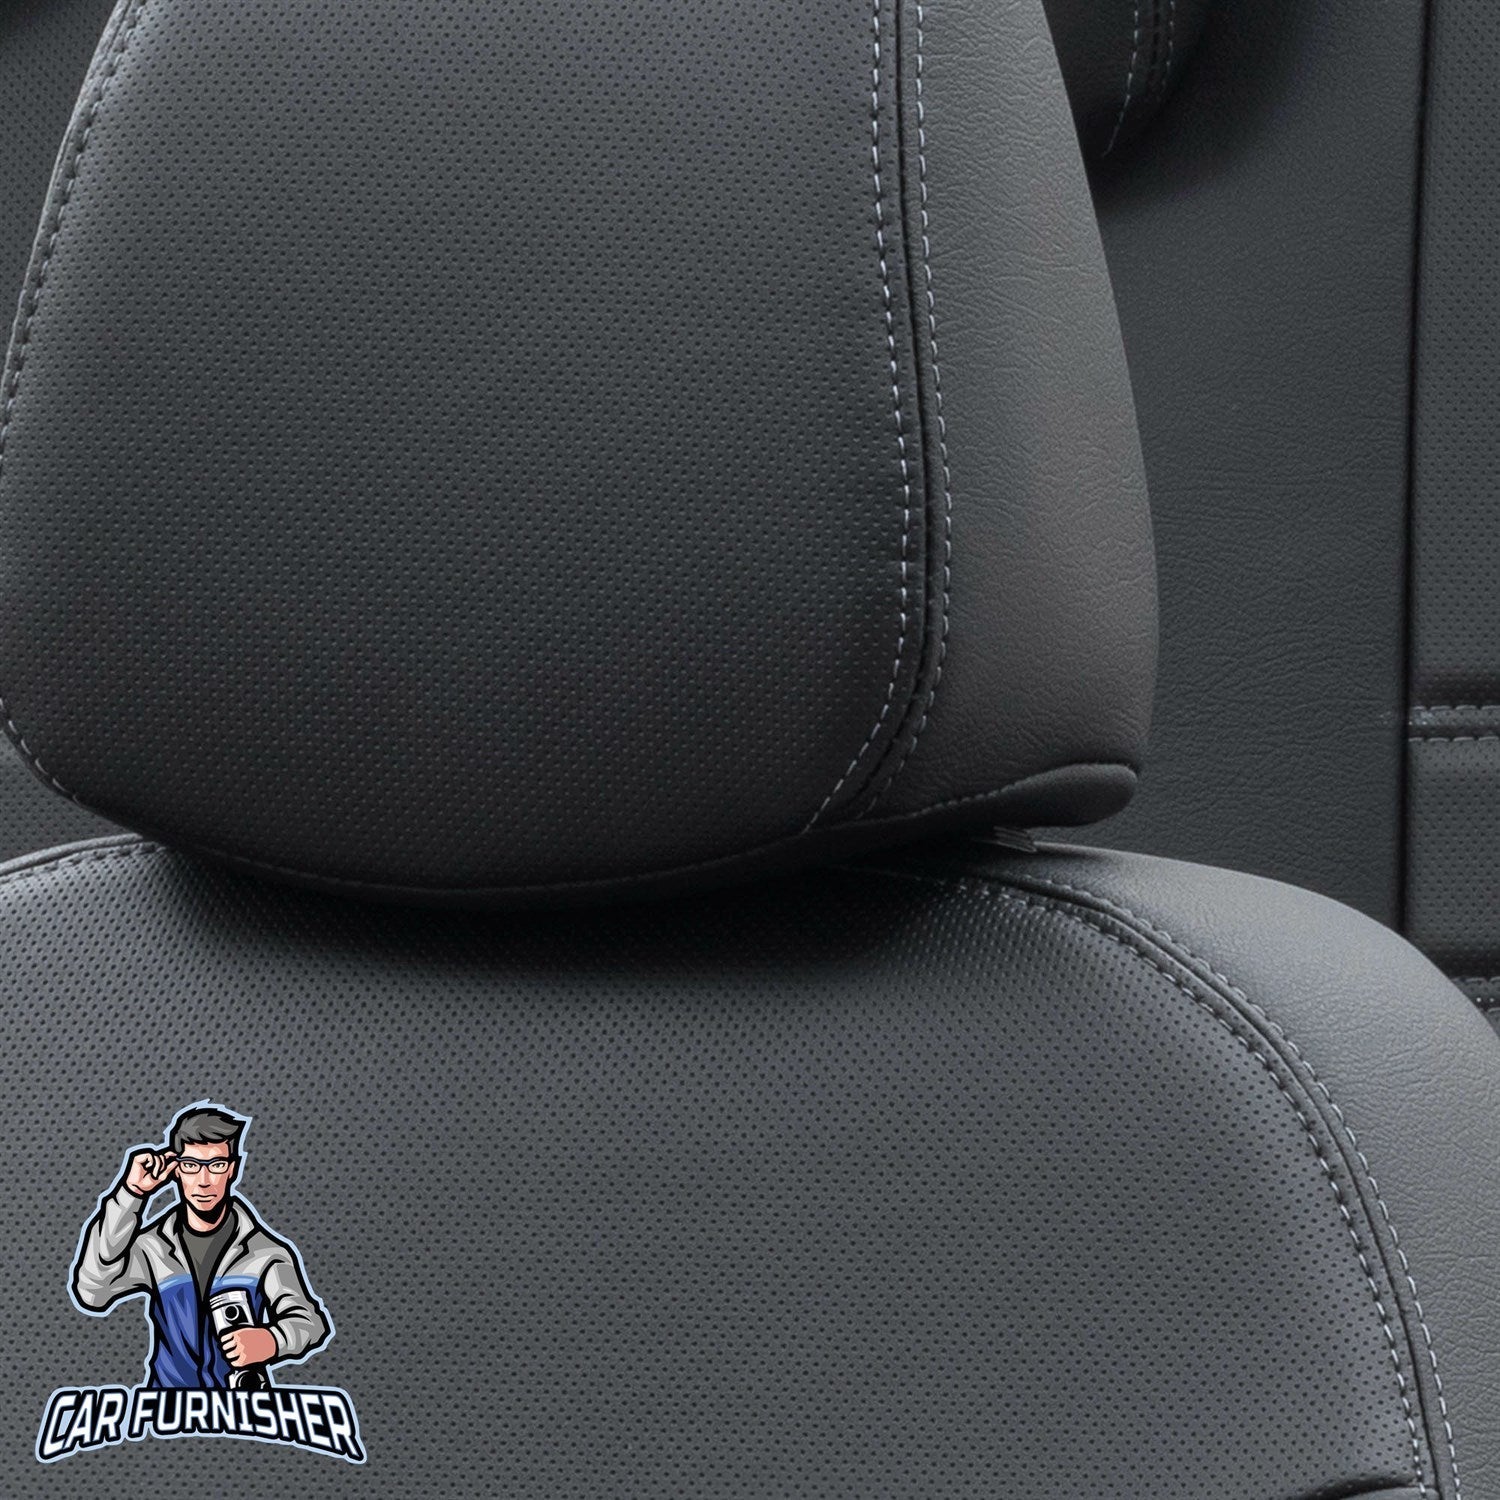 Audi Q2 Car Seat Cover 2016-2023 Custom Istanbul Design Black Full Set (5 Seats + Handrest) Leather & Fabric